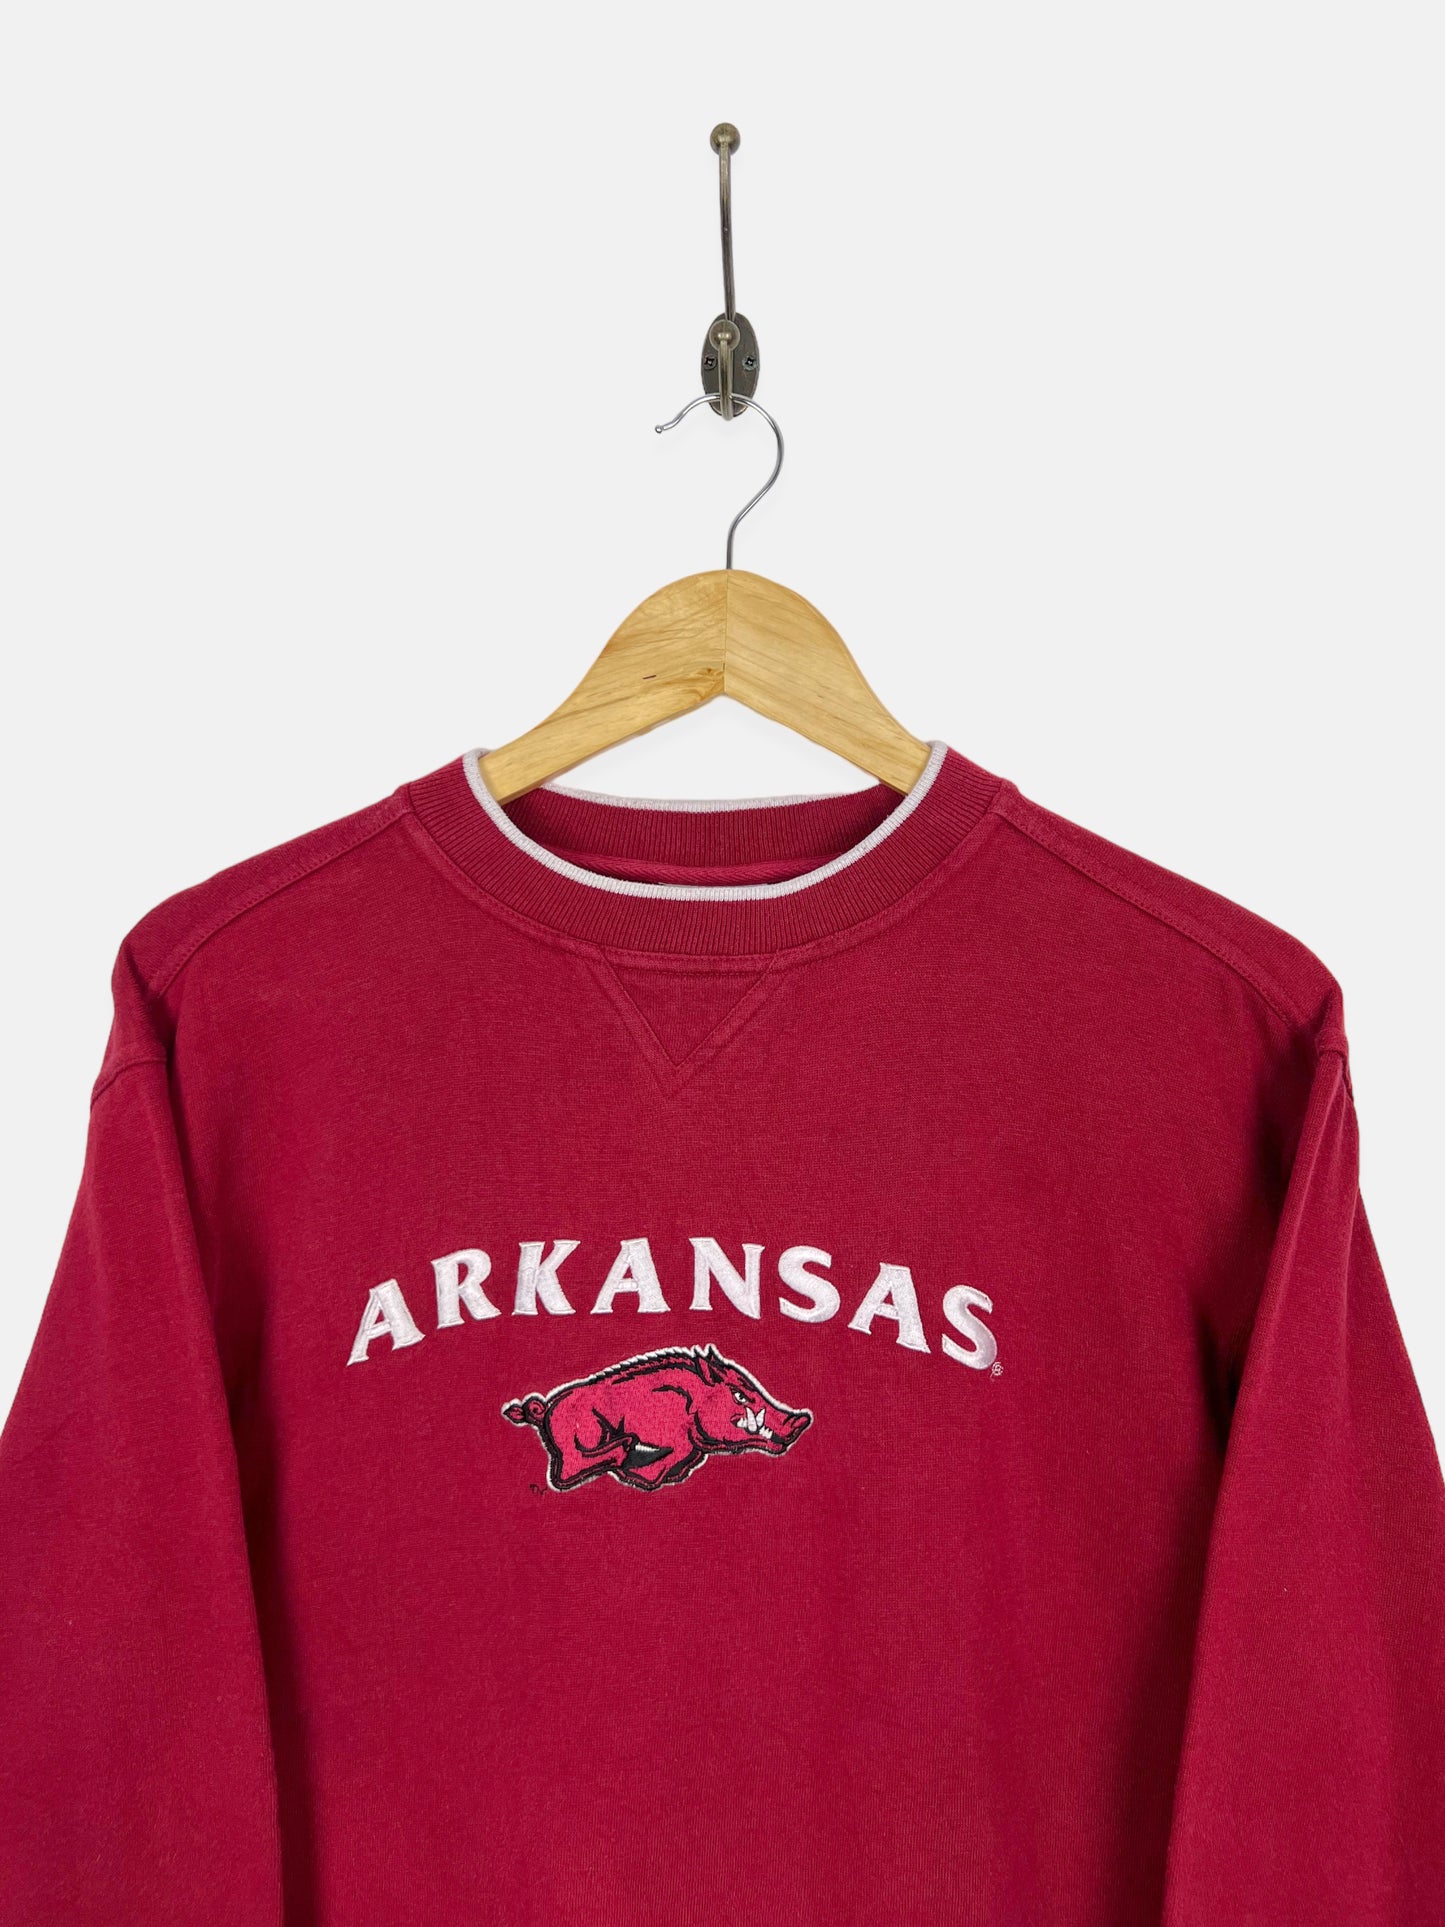 90's Arkansas Embroidered Vintage Sweatshirt Size 6-8